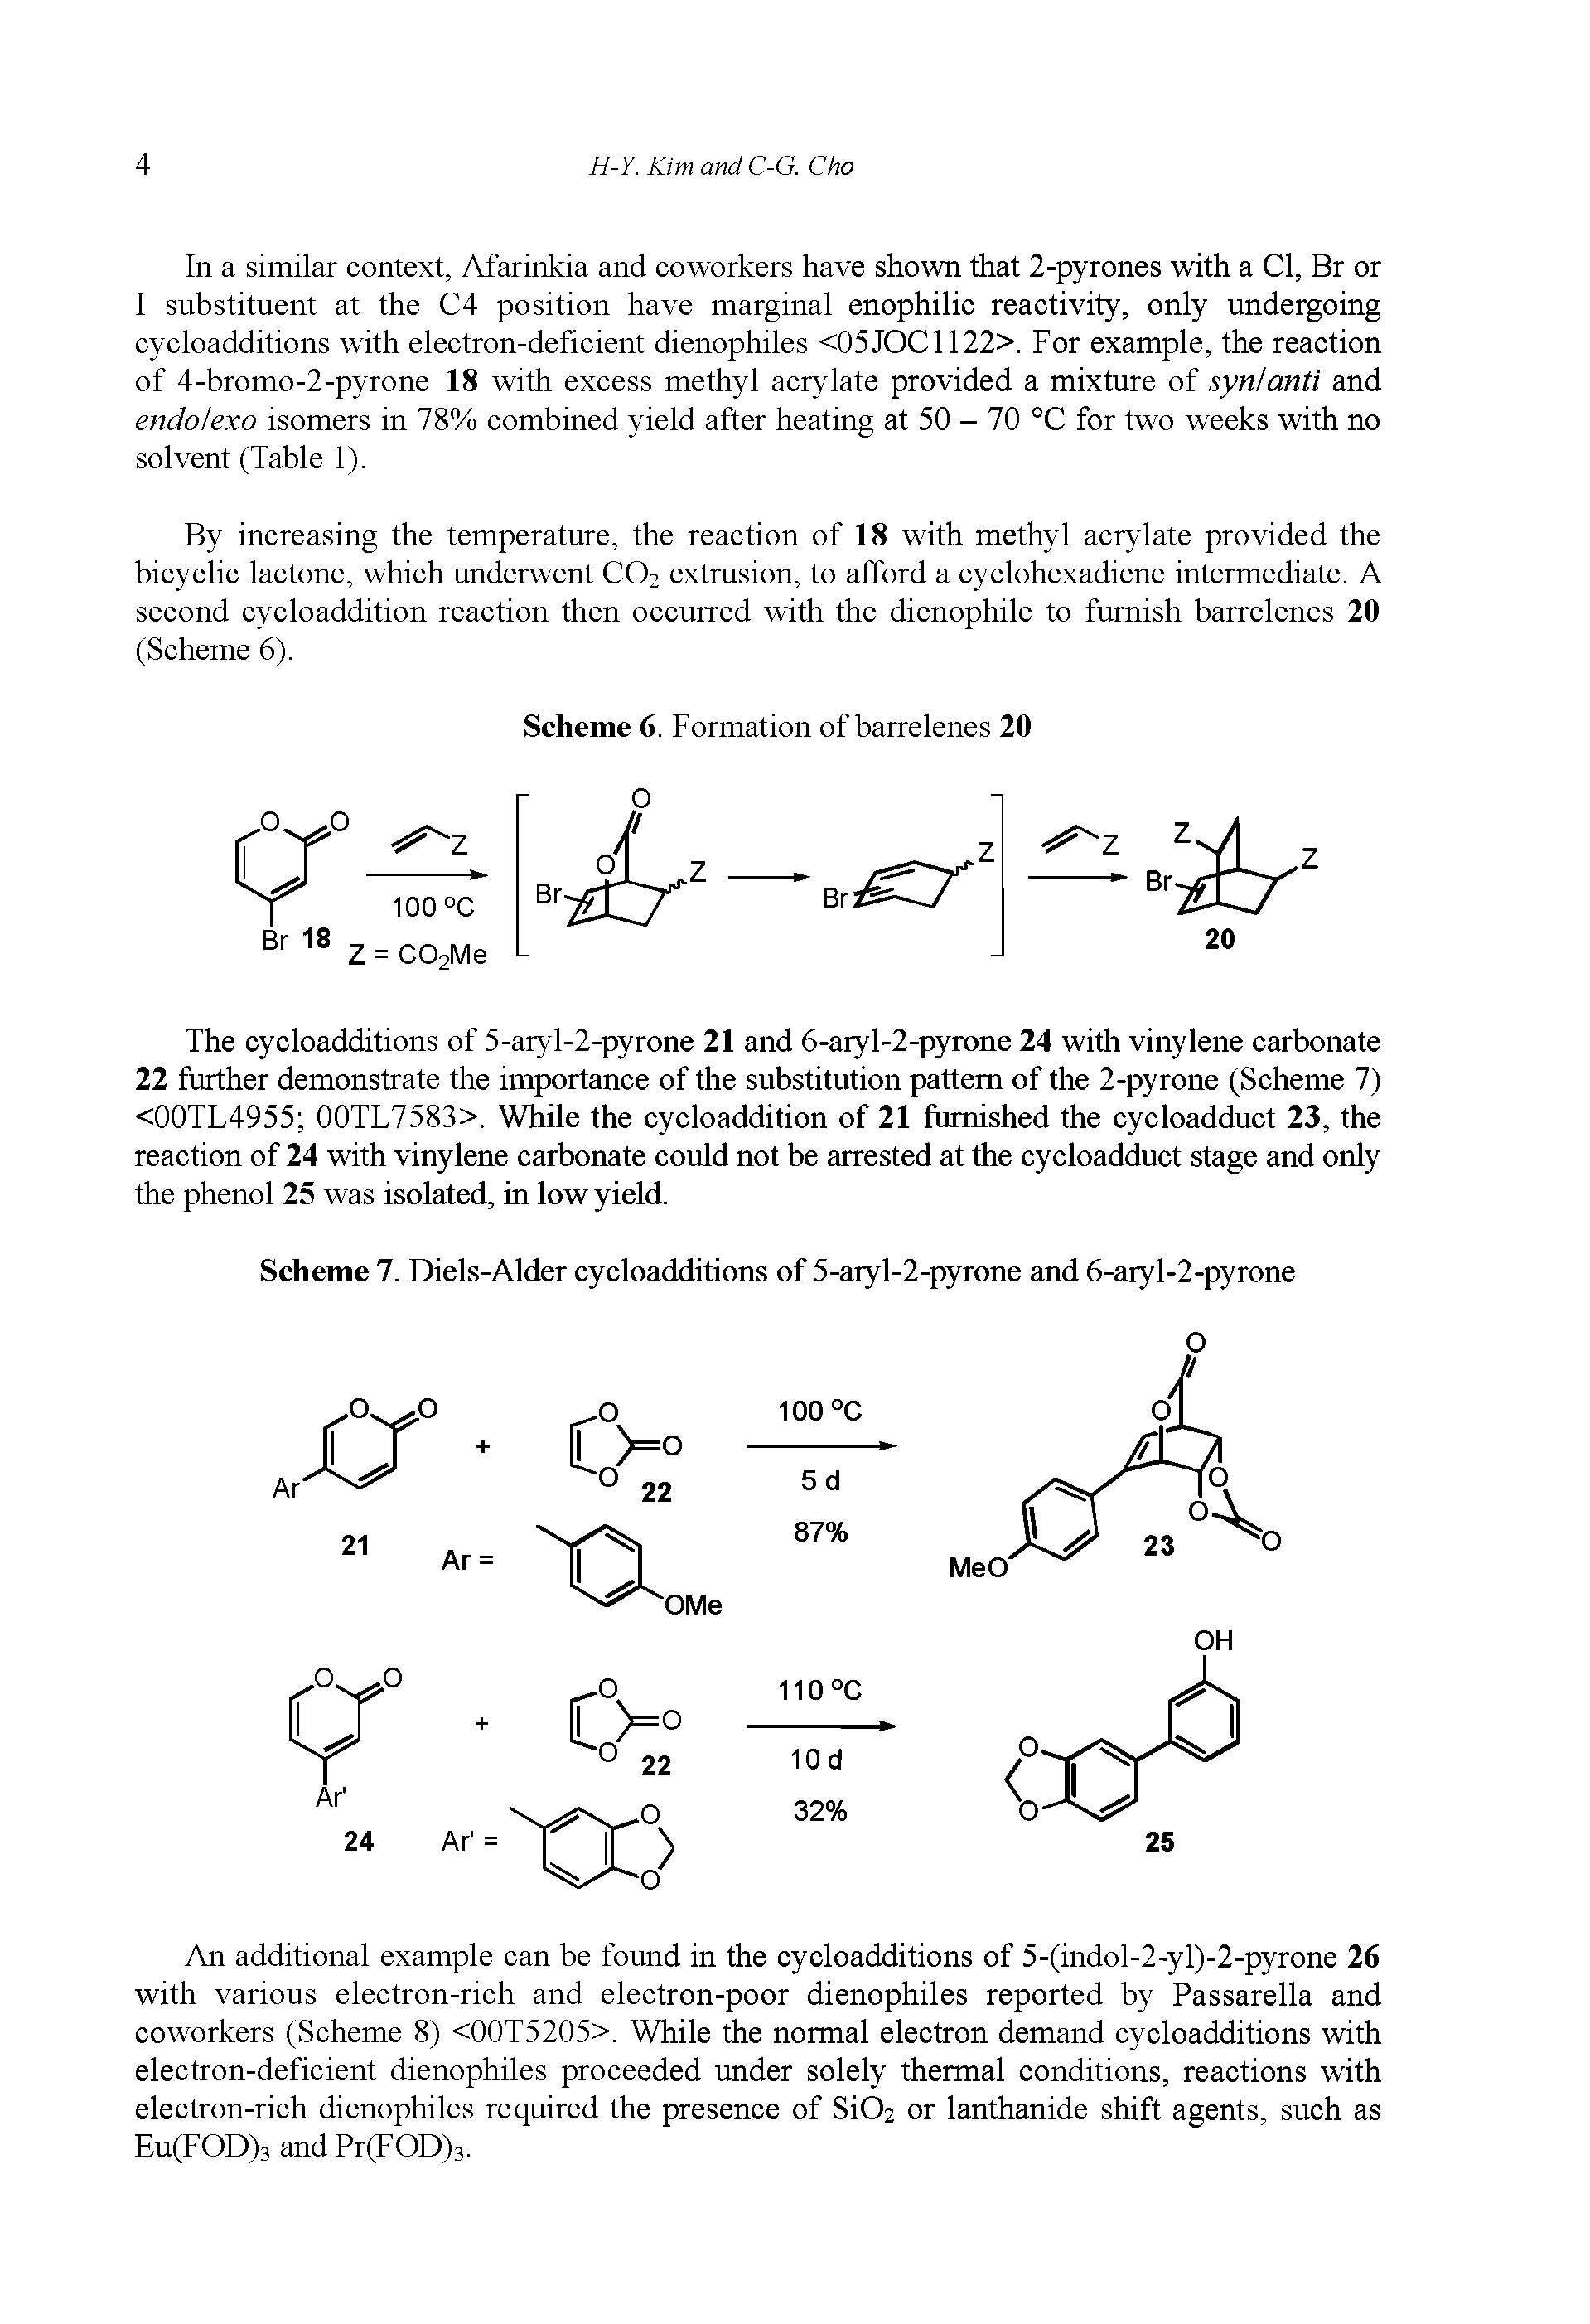 Scheme 7. Diels-Alder cycloadditions of 5-aryl-2-pyrone and 6-aryl-2-pyrone...